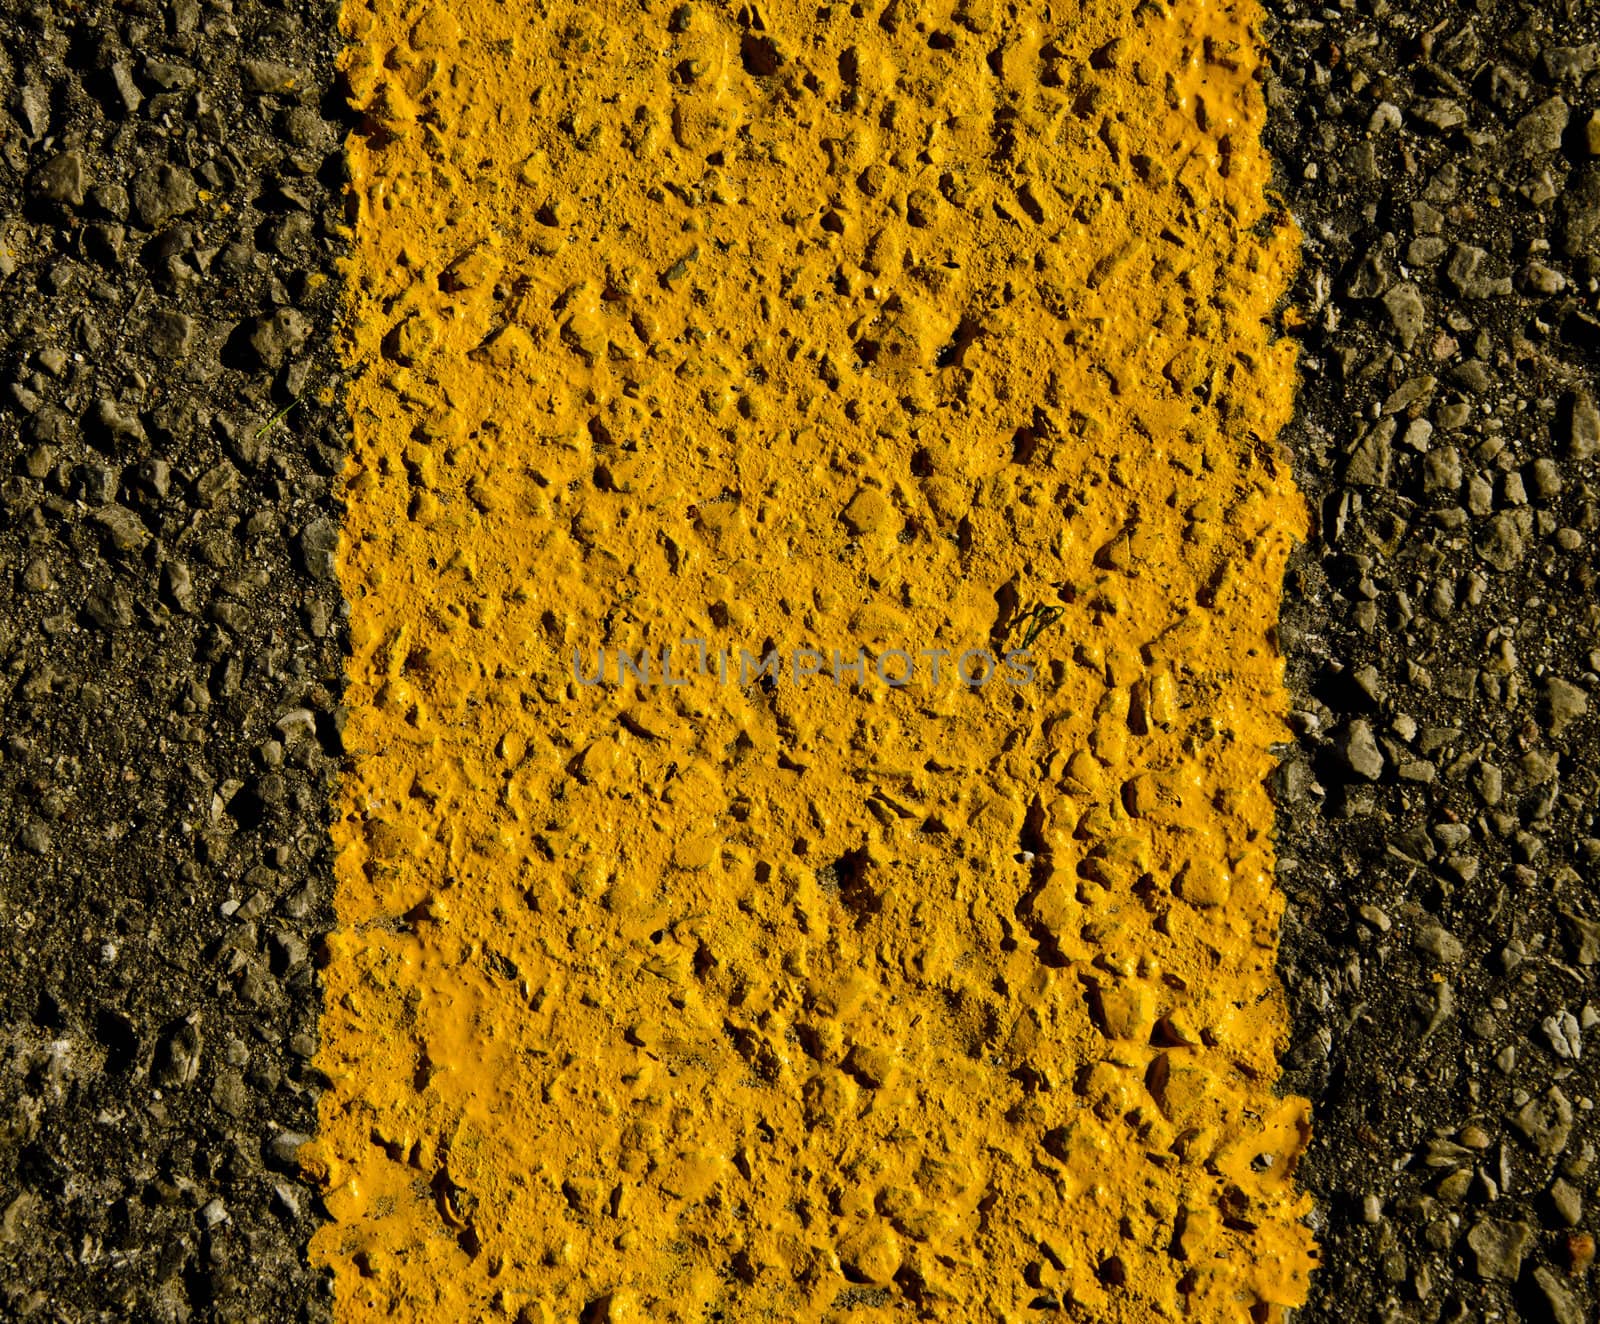 Asphalt and yellow road markings closeup macro background.